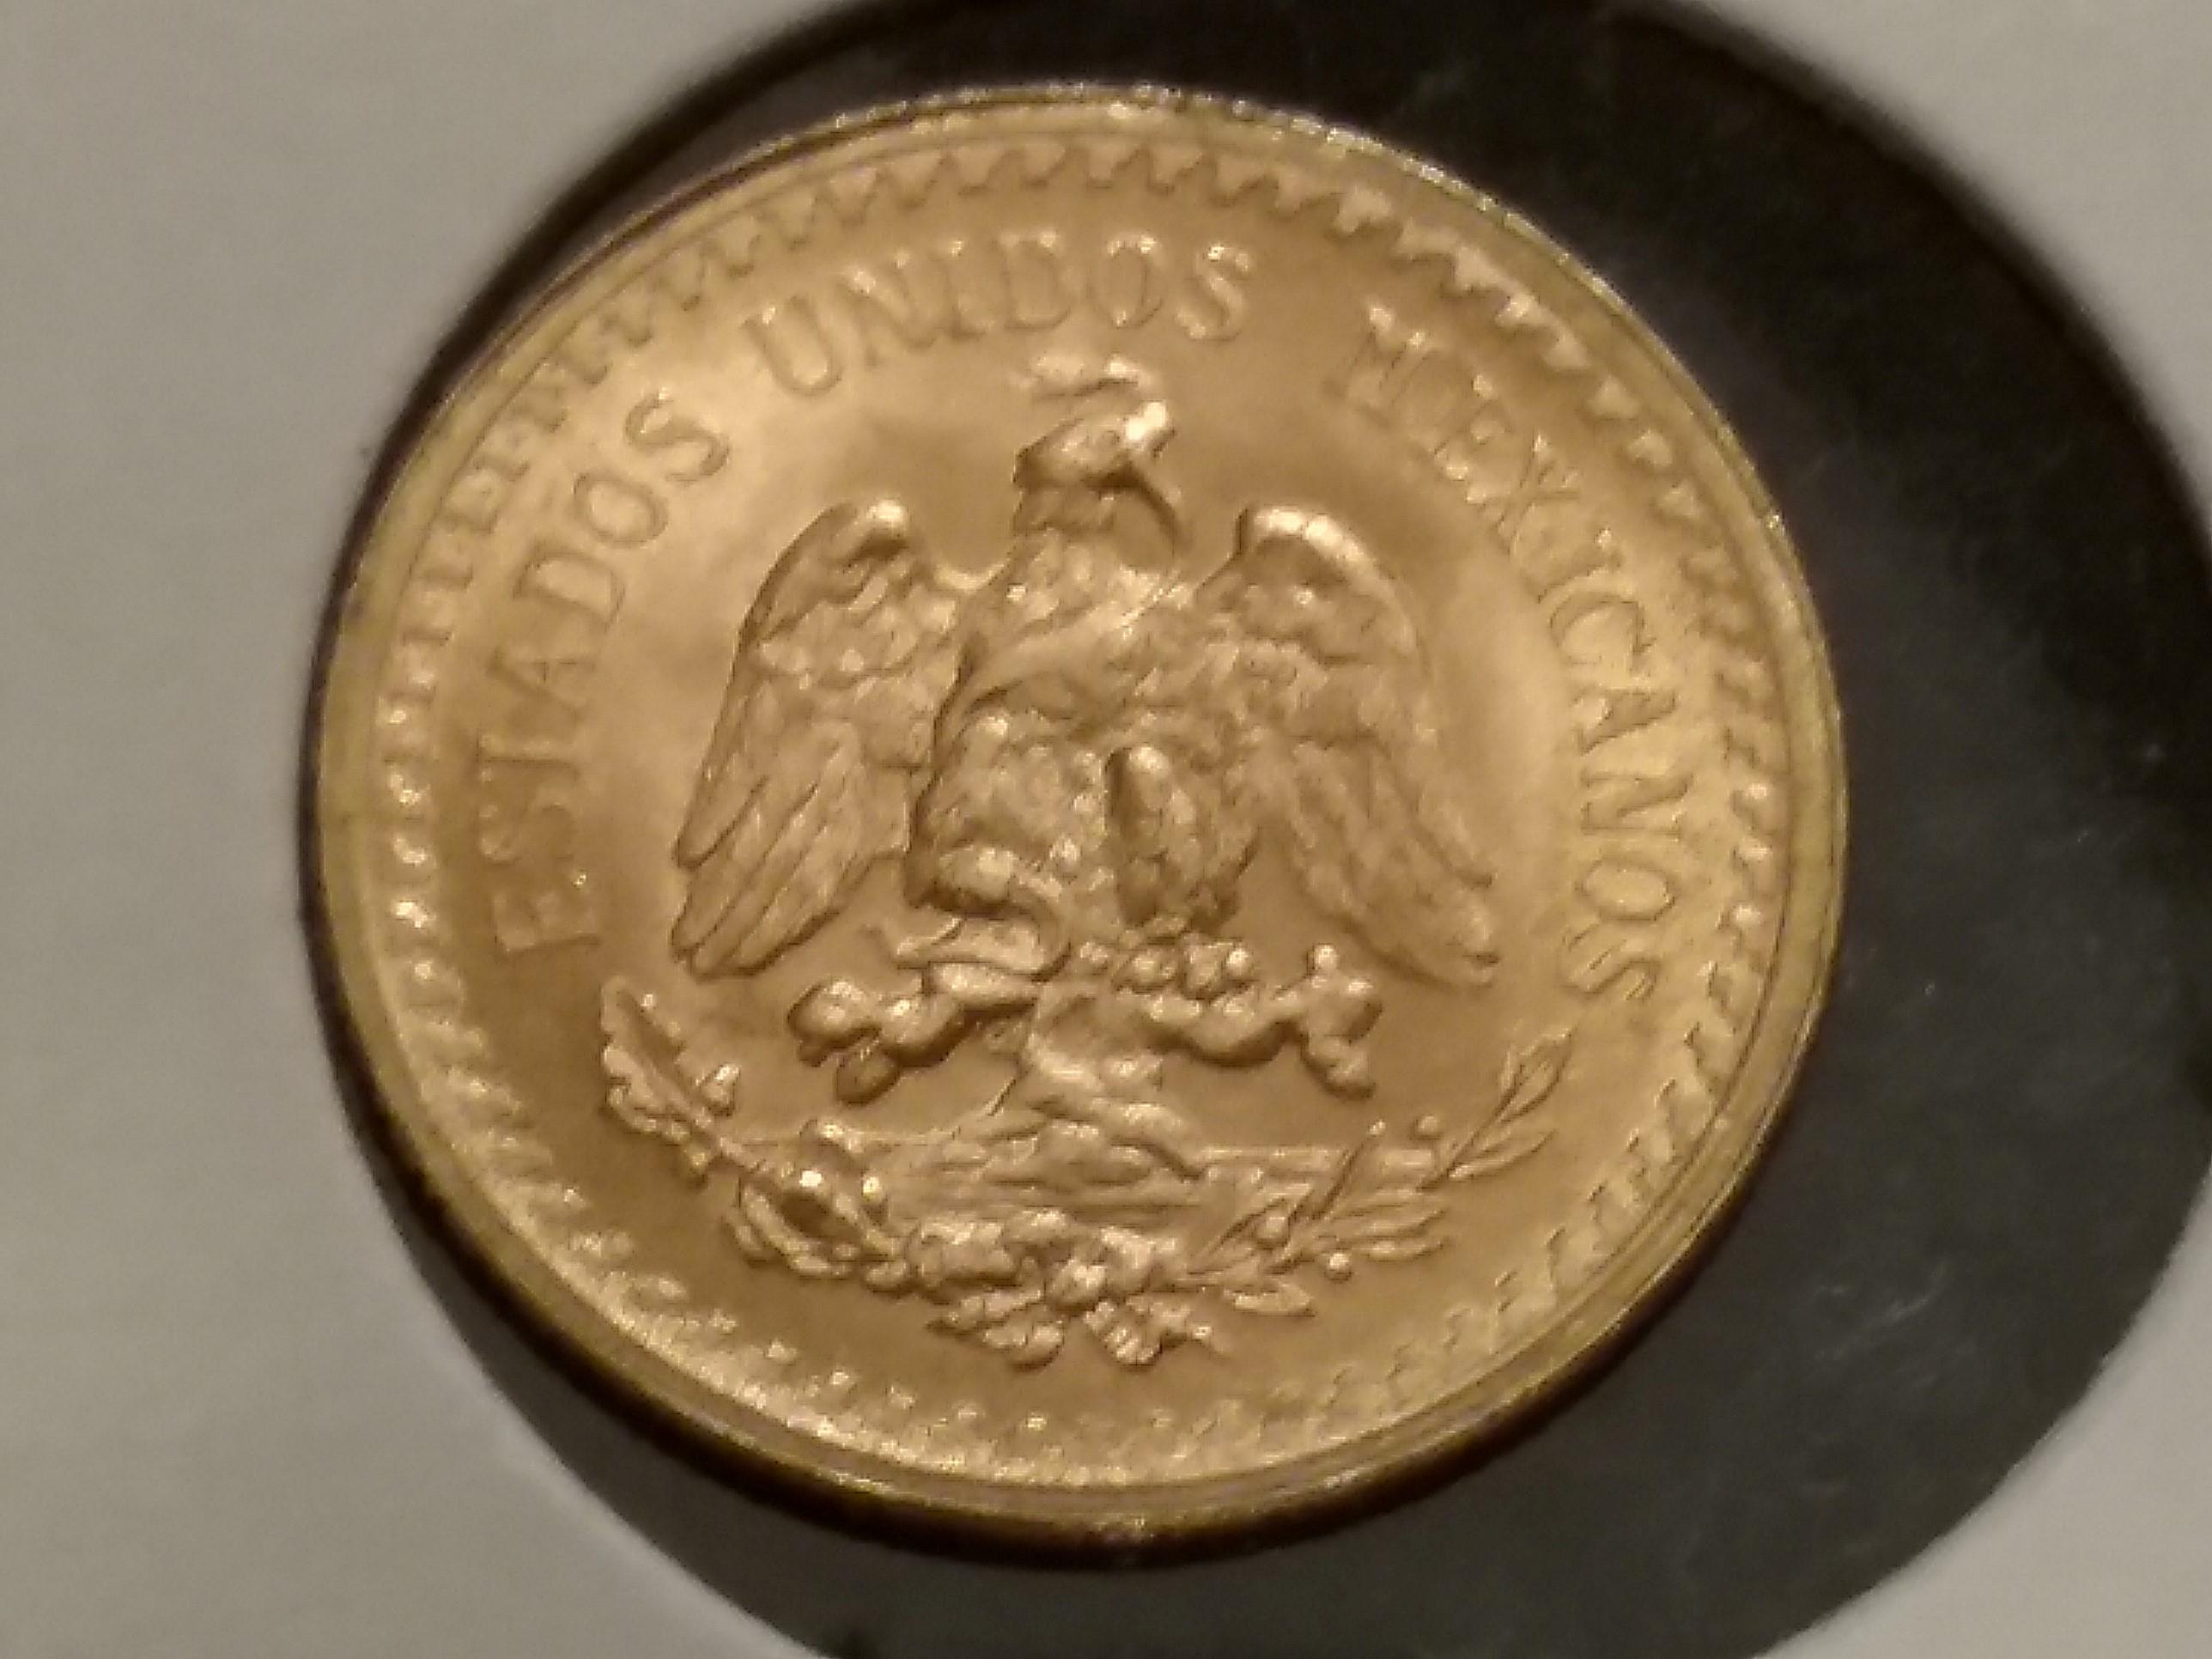 GOLD Mexico 1945 2 1/2 pesos Brilliant Uncirculated